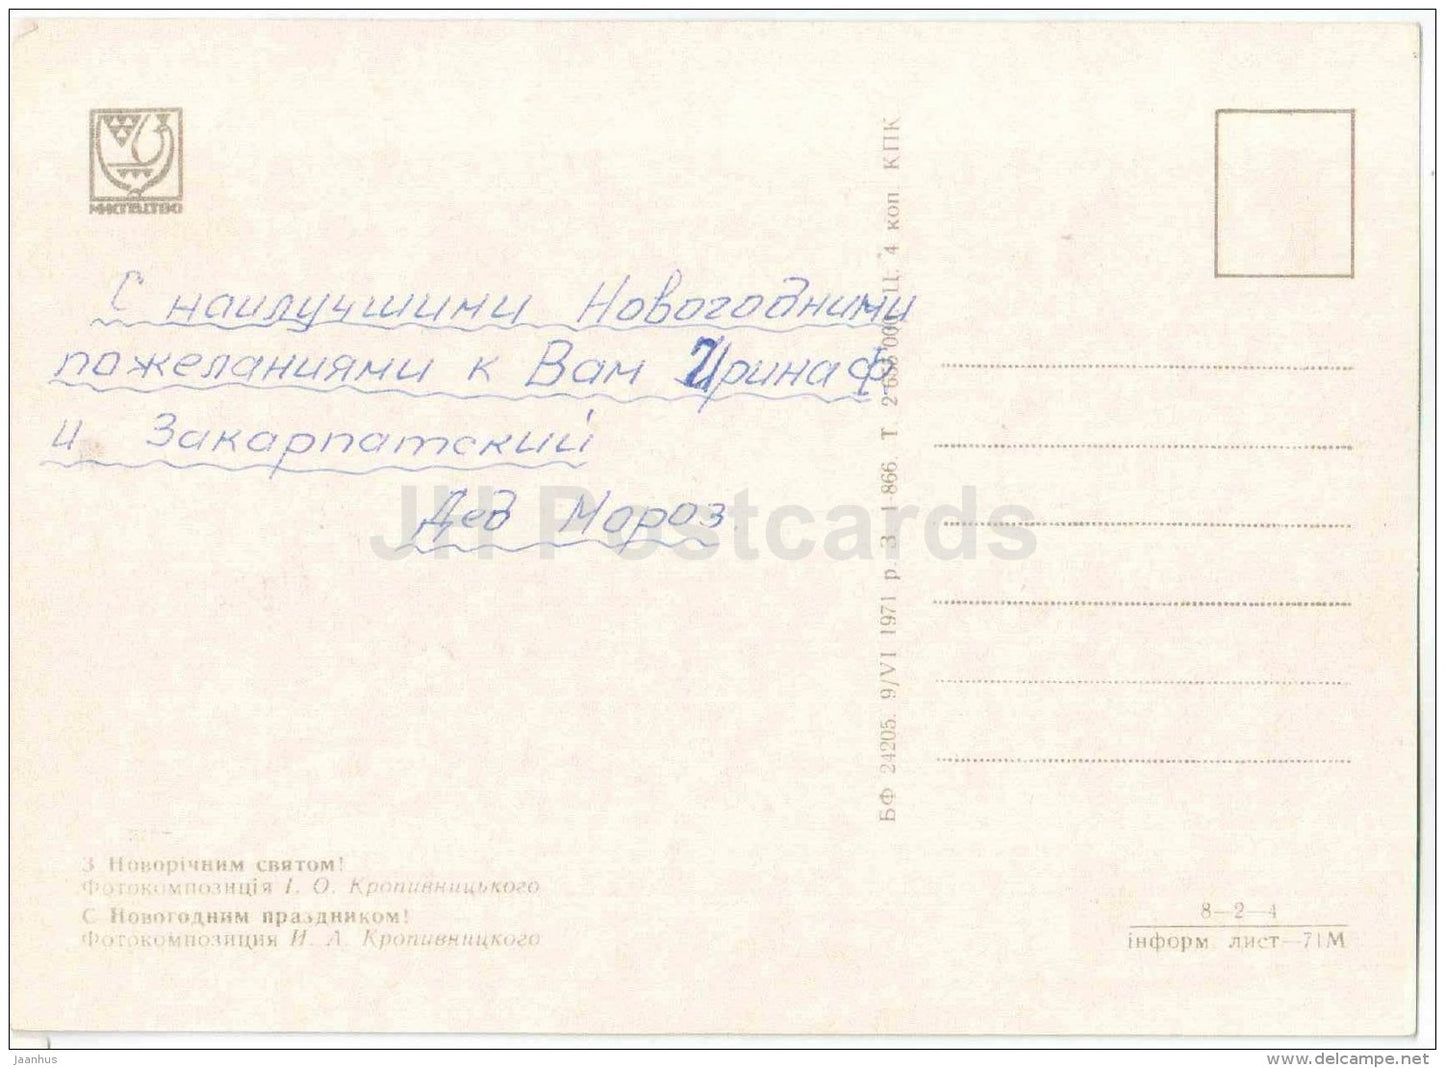 New Year Greeting Card - champange - fir tree - cones - 1971 - Ukraine USSR - used - JH Postcards